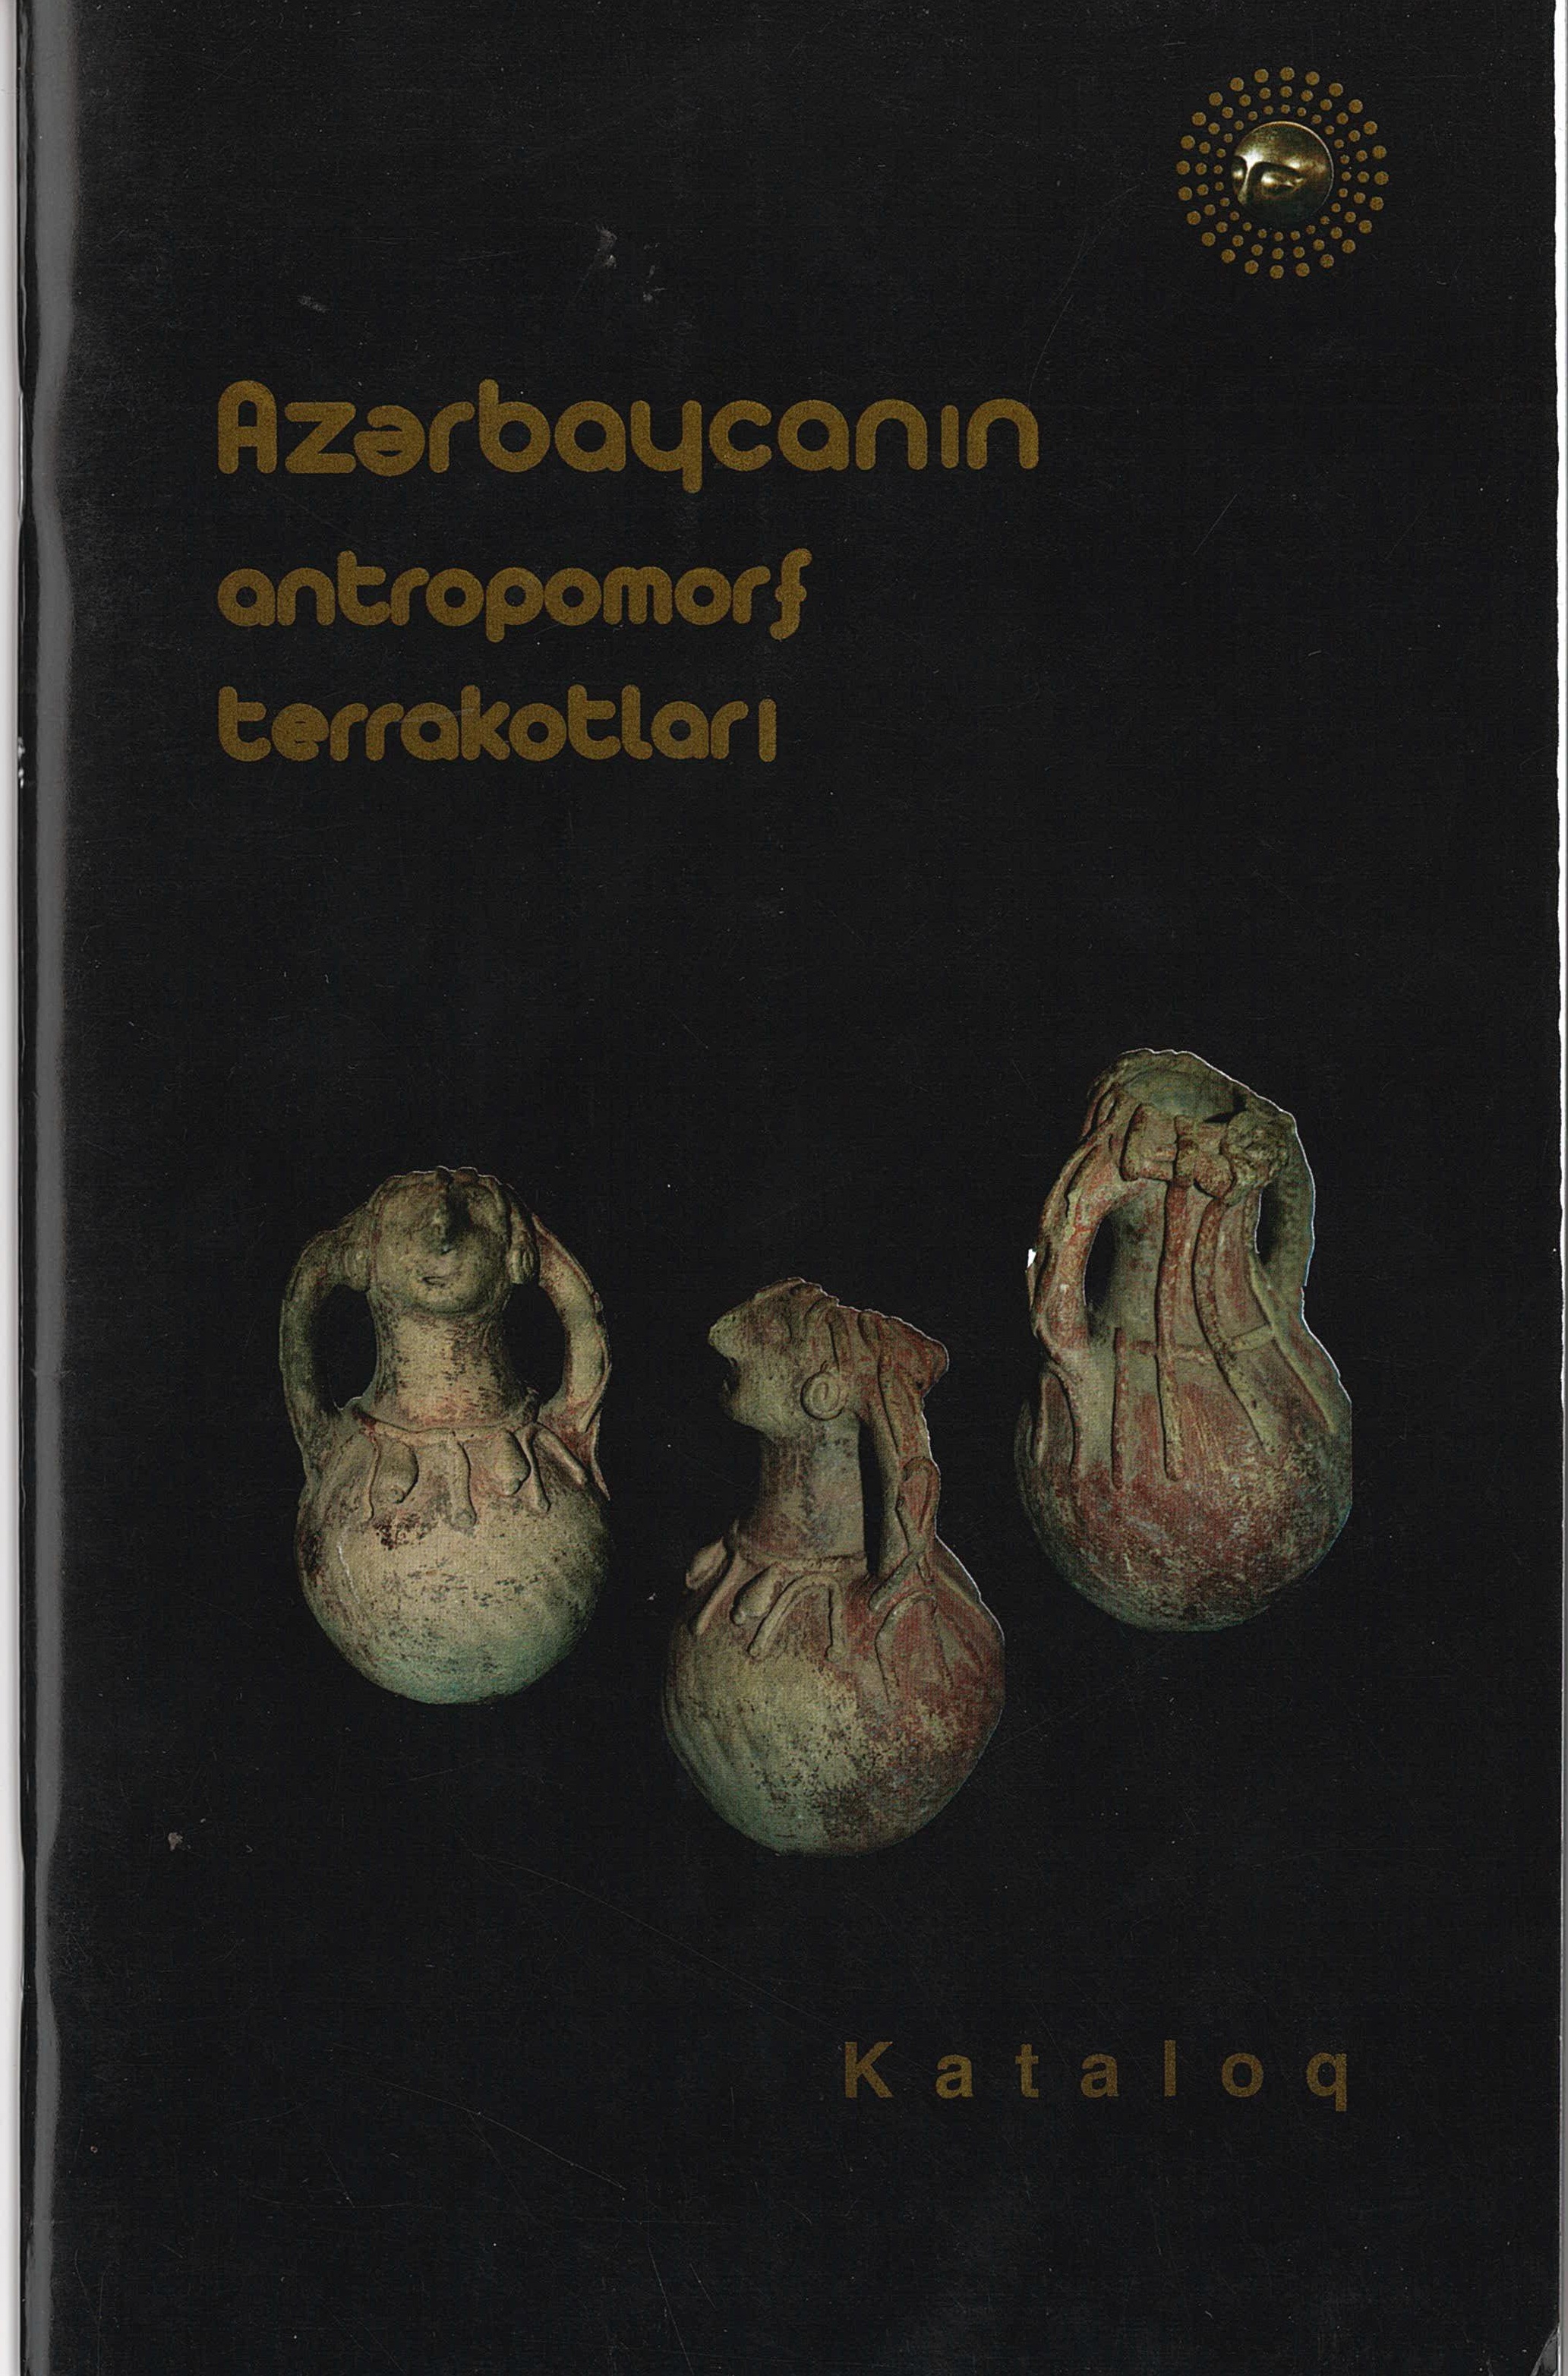  Anthropomorphic terracotta of Azerbaijan